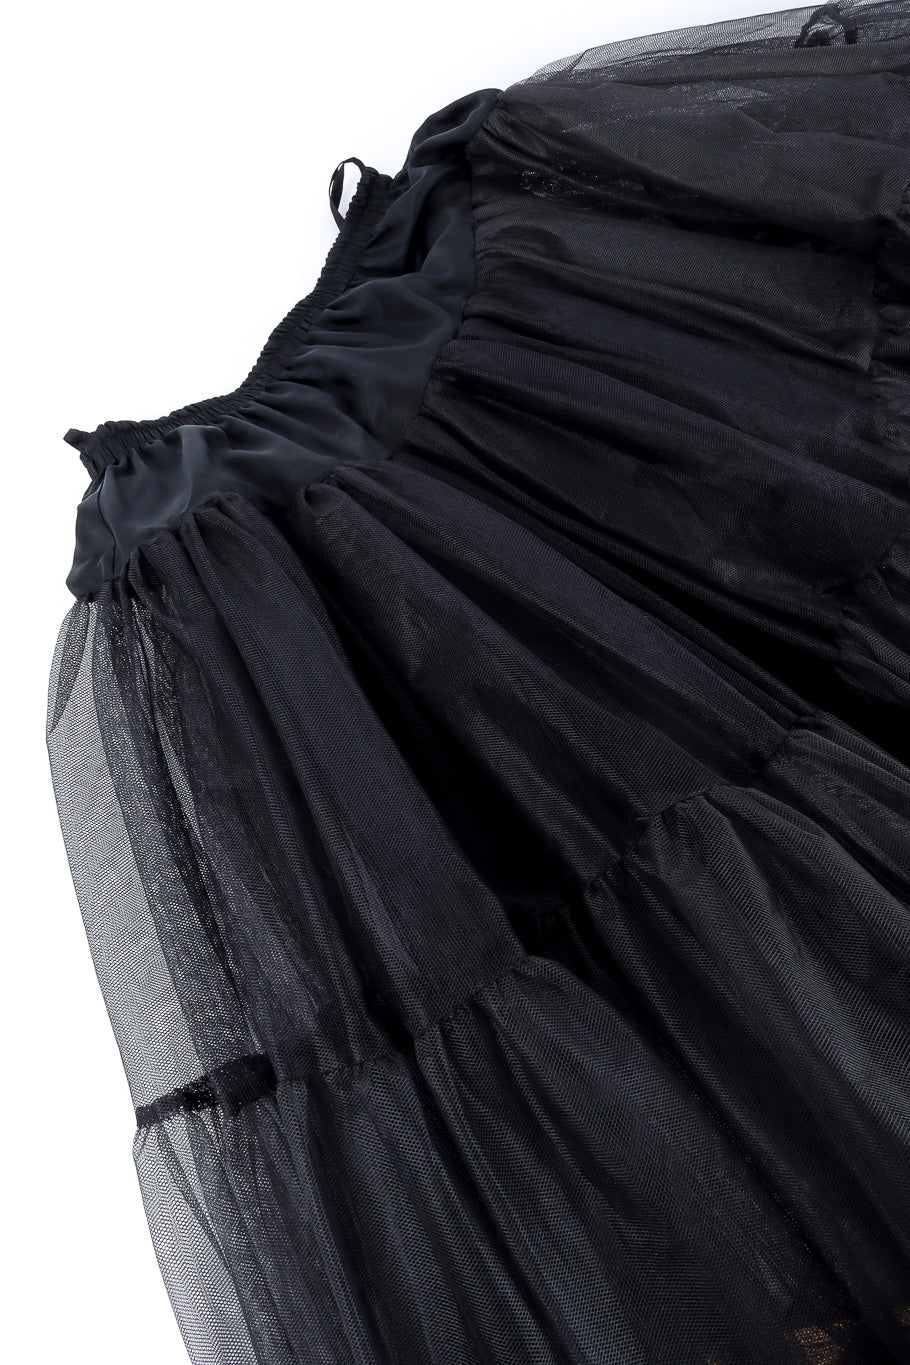 Petticoat skirt by Morgane Le Fay waist flat lay @recessla